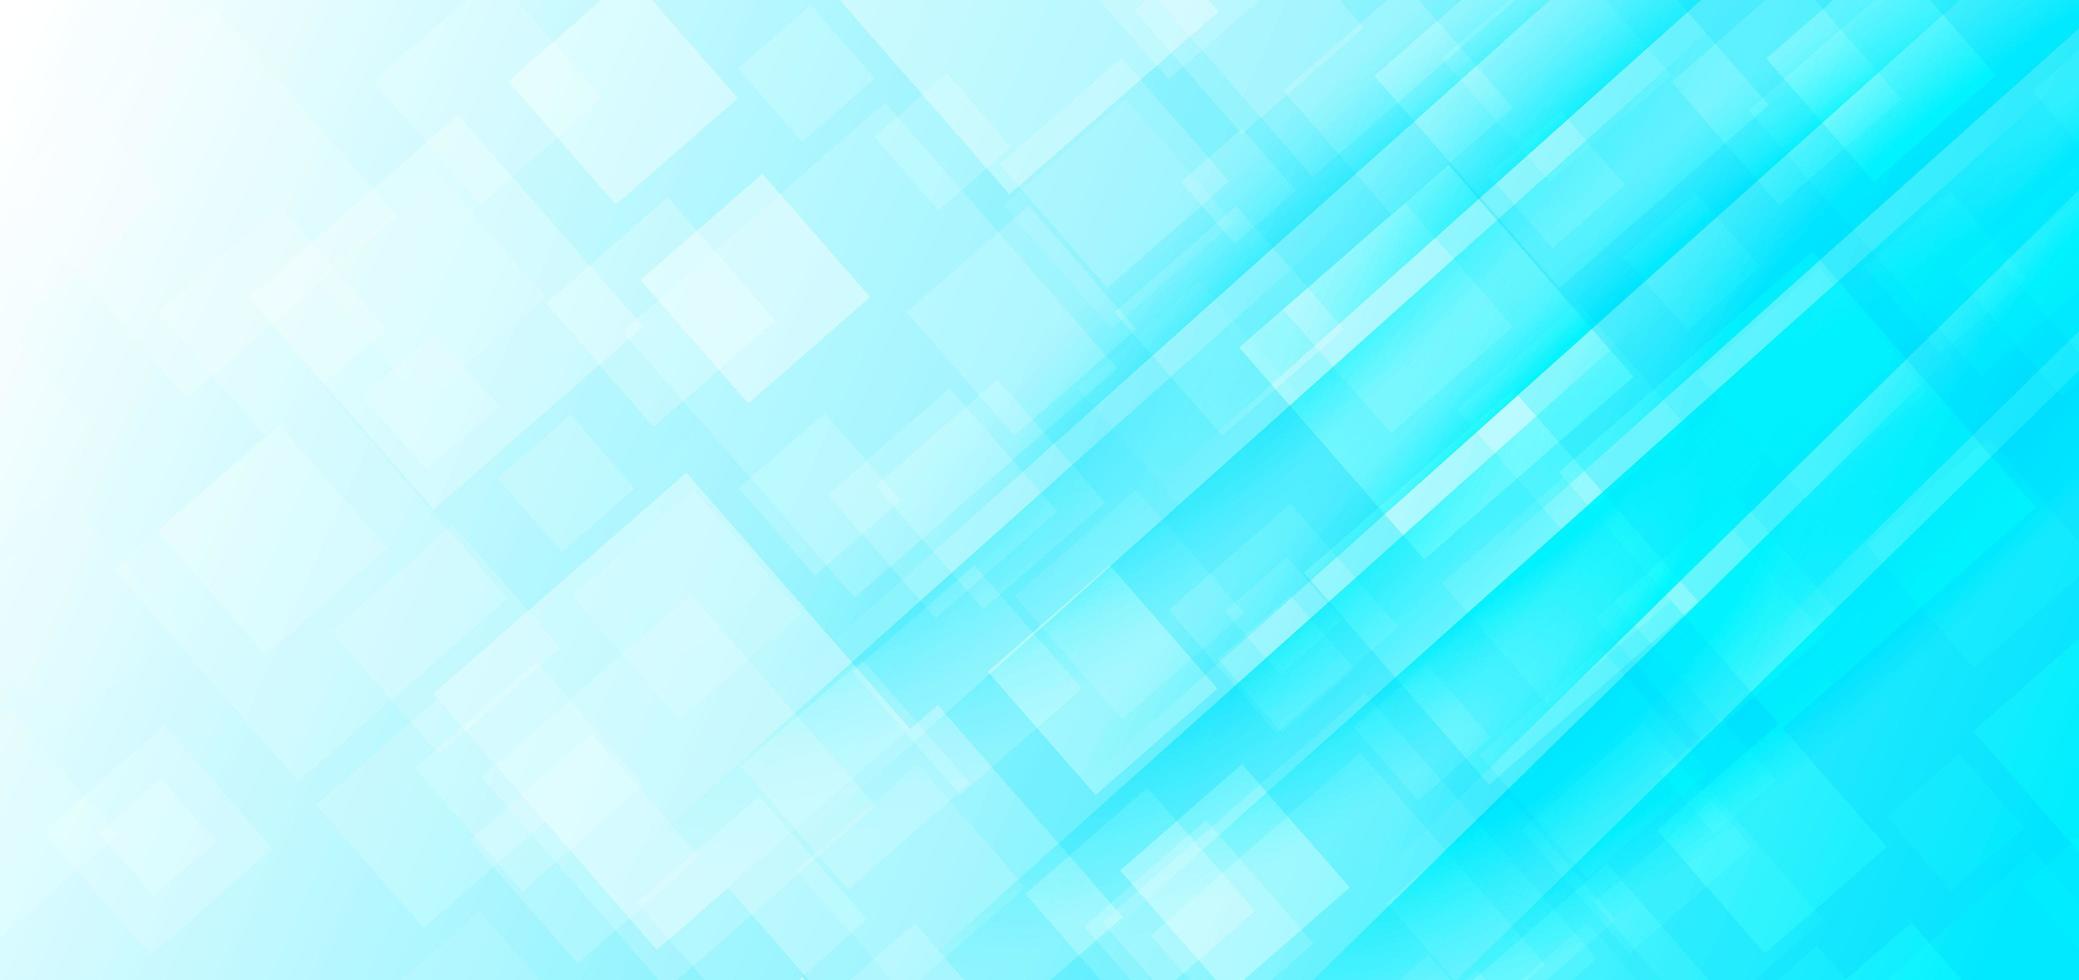 Abstract elegant diagonal soft blue background vector